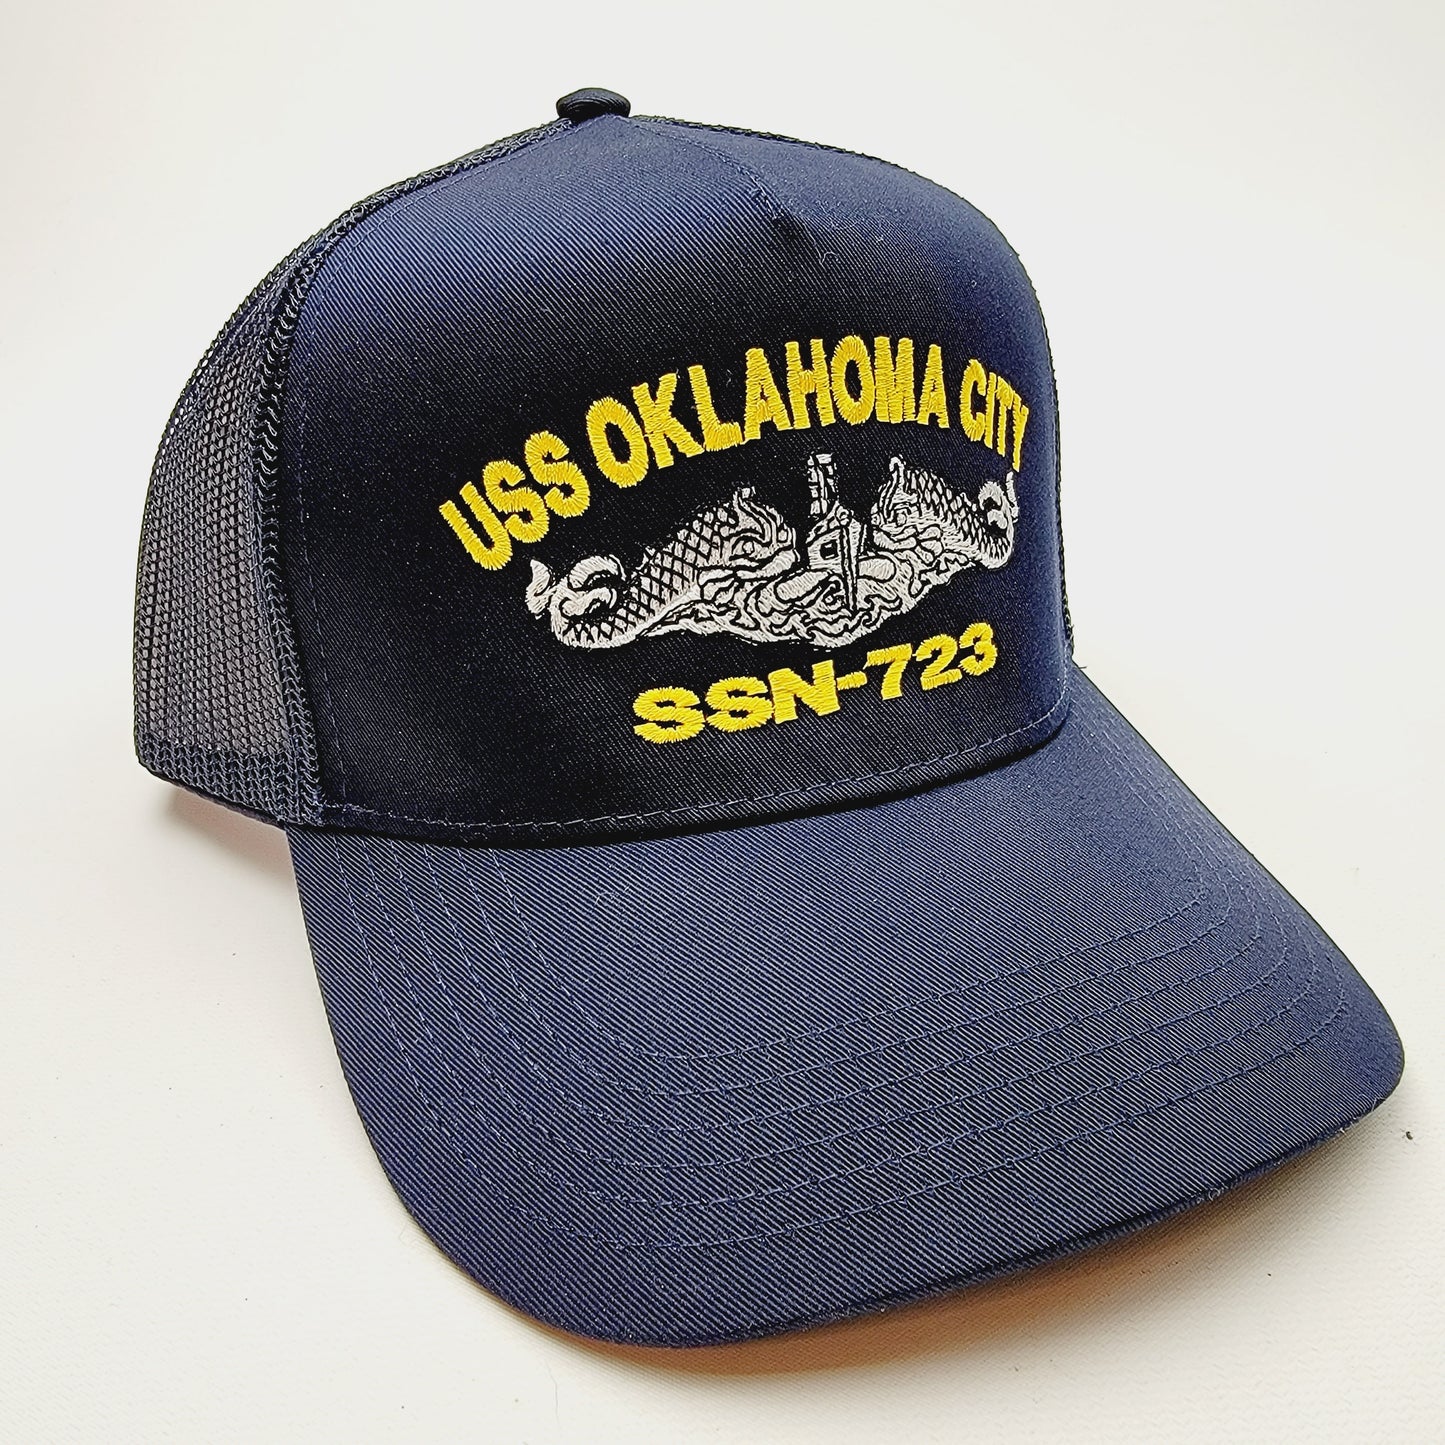 US NAVY USS OKLAHOMA CITY SSN-723 Embroidered Hat Baseball Cap Adjustable Blue